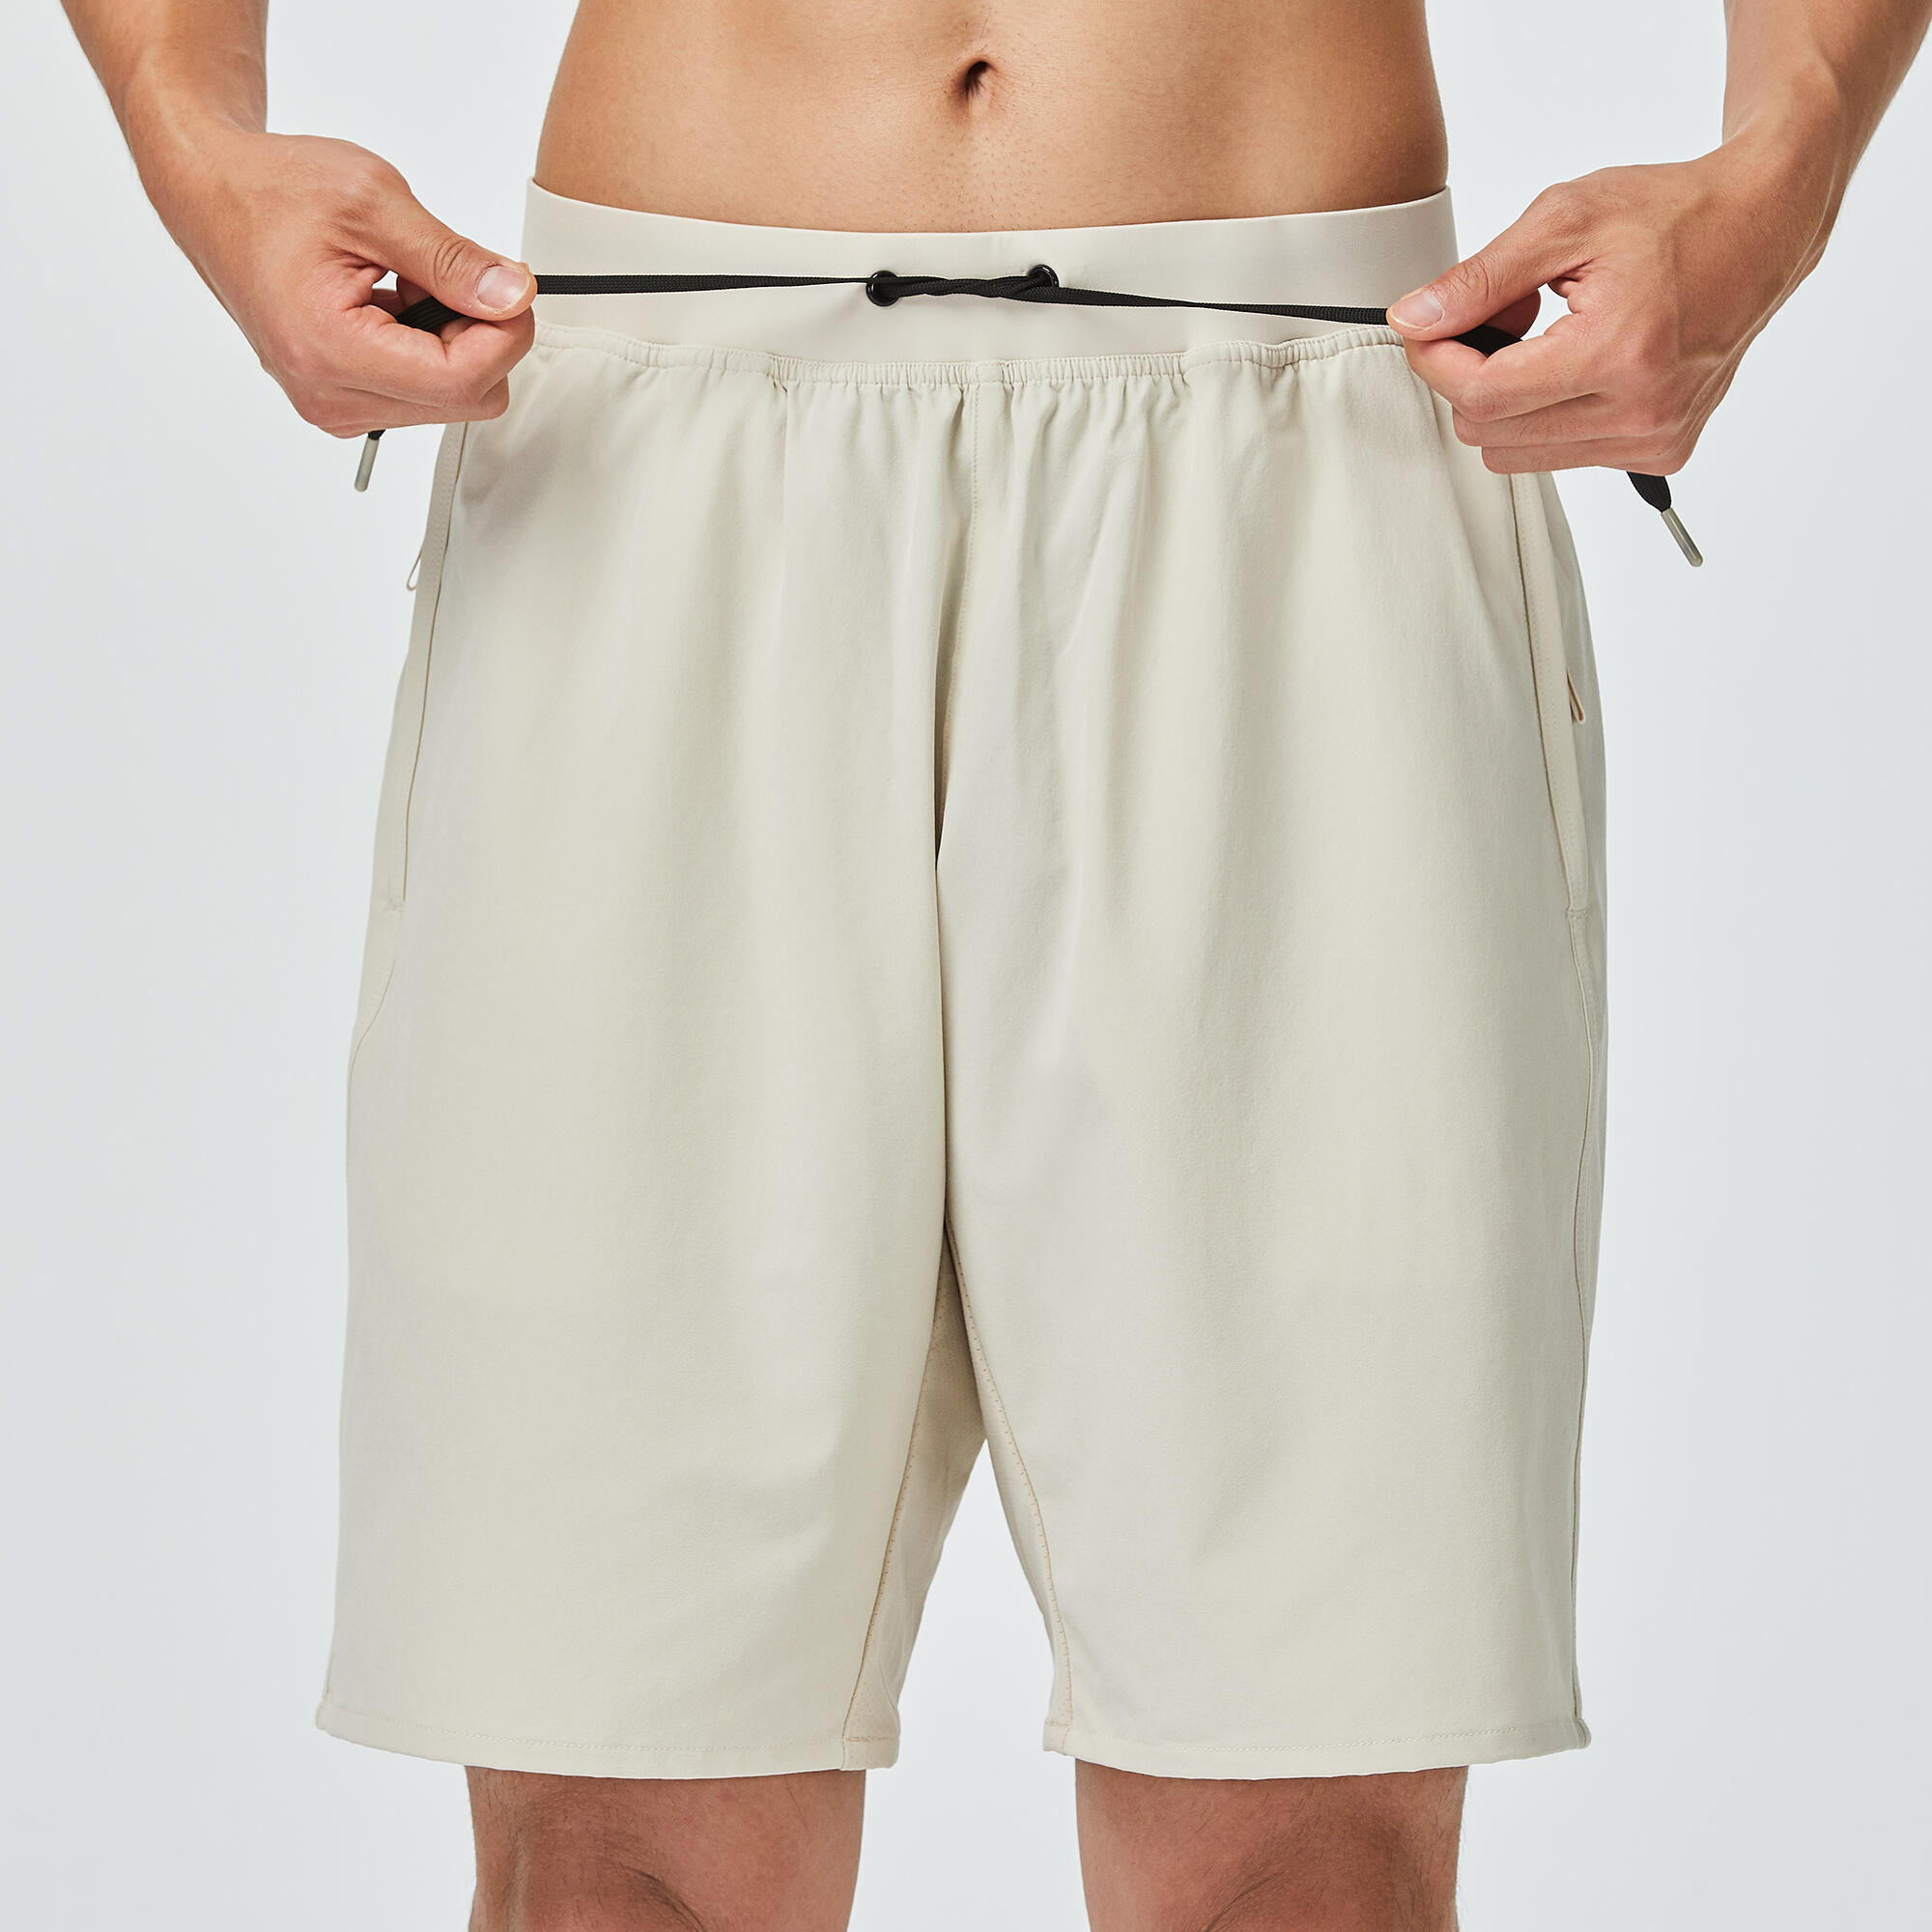 Men's Zip Pocket Breathable Fitness Shorts - Beige 6/9